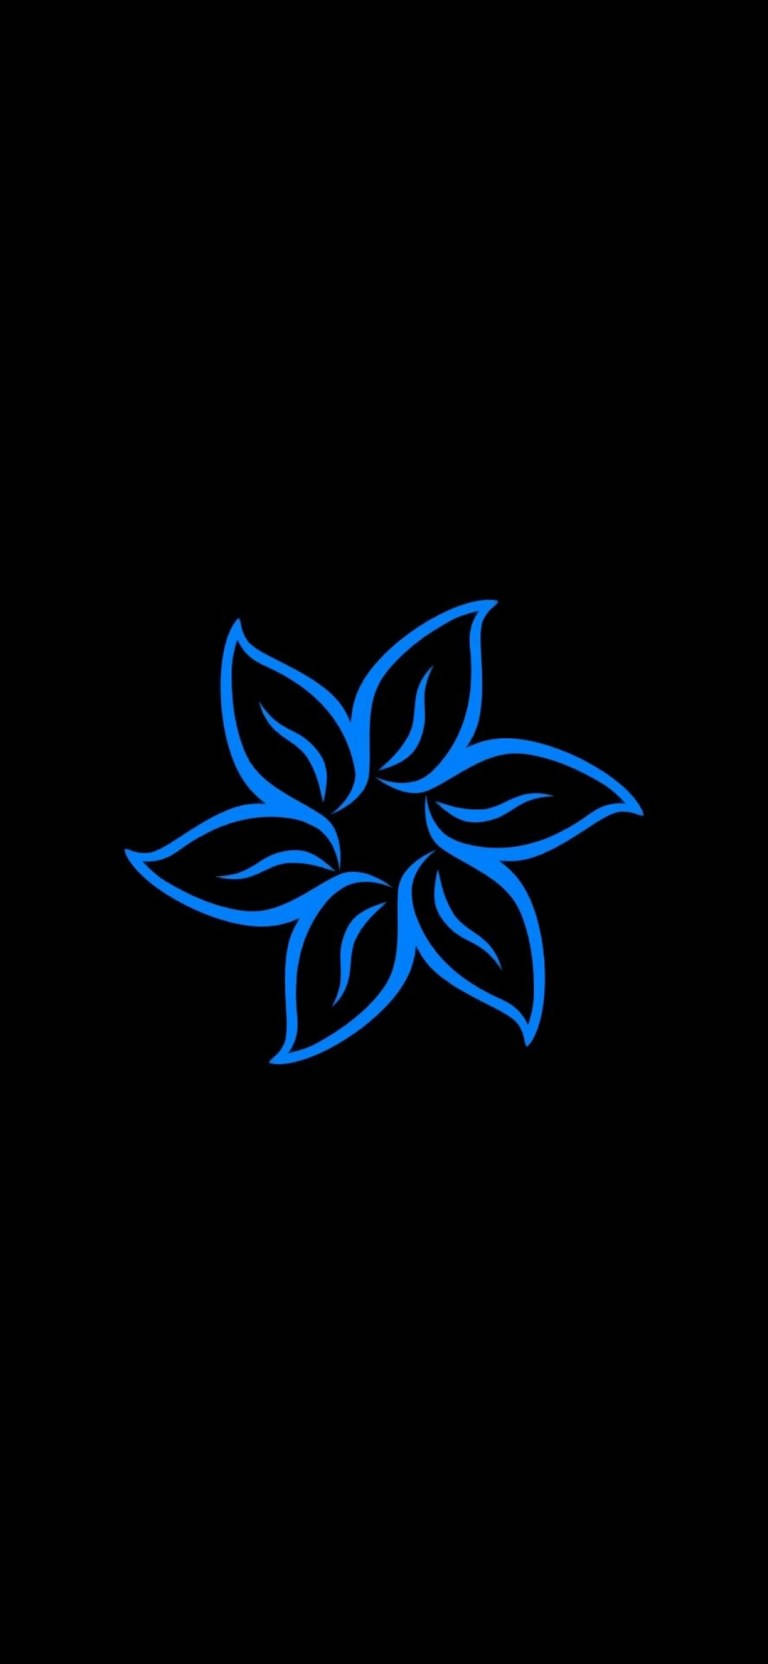 Stunning Blue Flower Oled Display Aesthetic Background